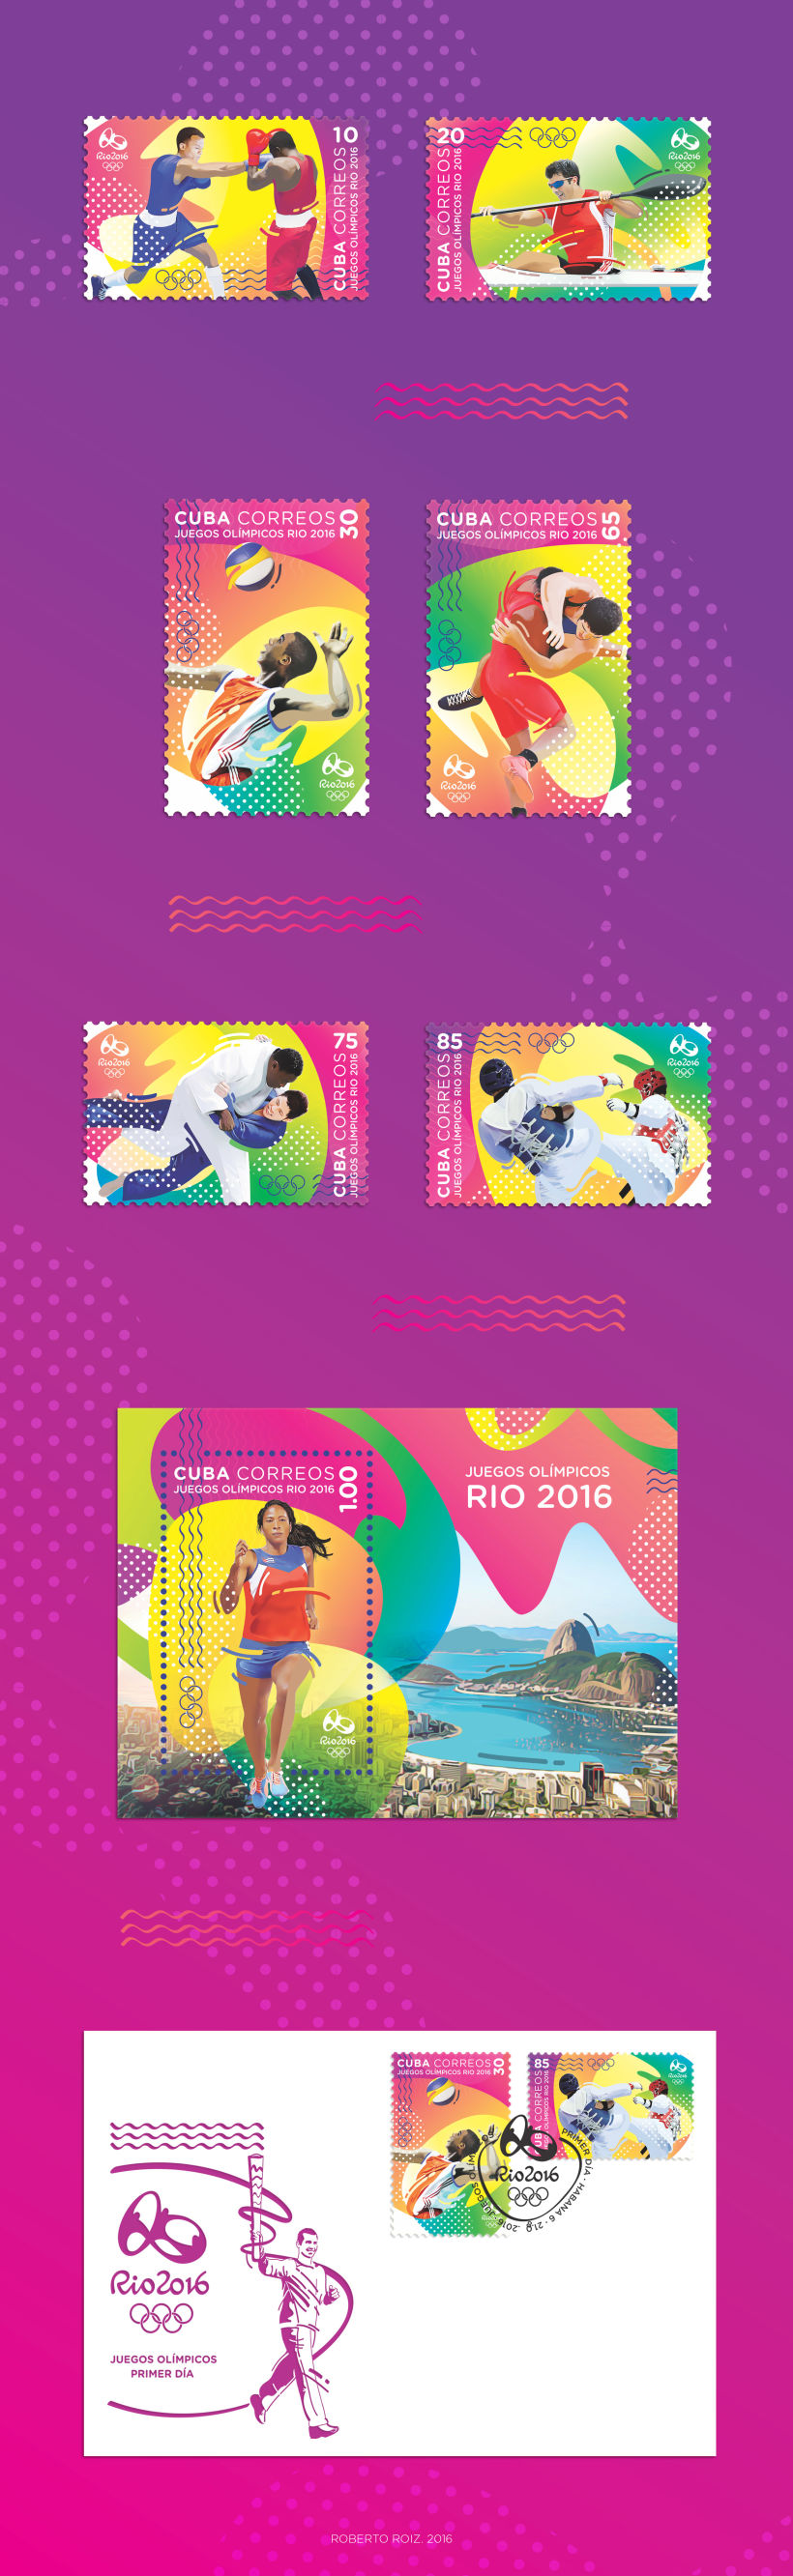 Juegos Olímpicos Rio 2016. Sello postal -1